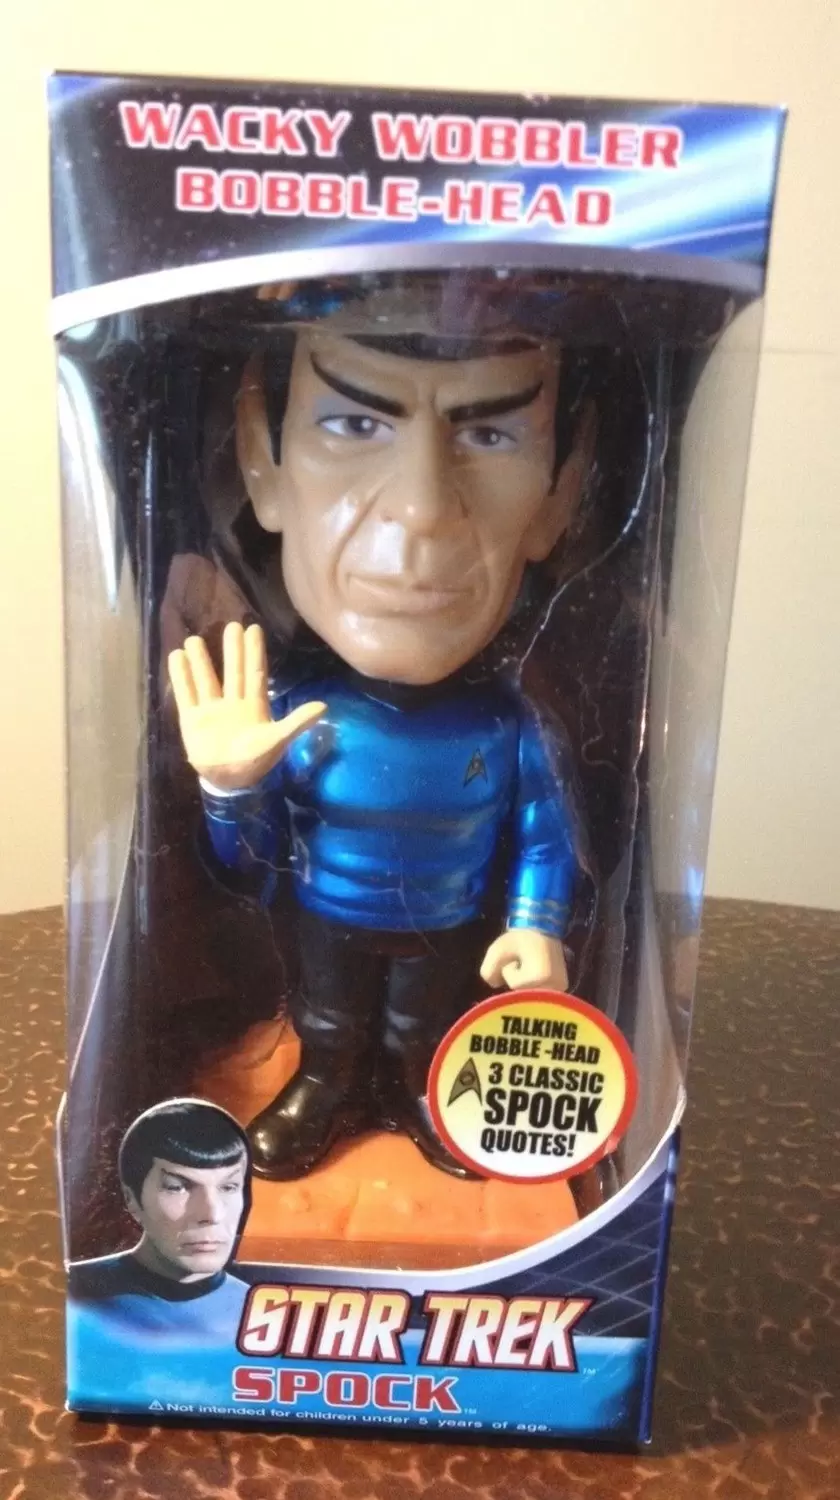 Wacky Wobbler Star Trek - Star Trek - Spock Metallic